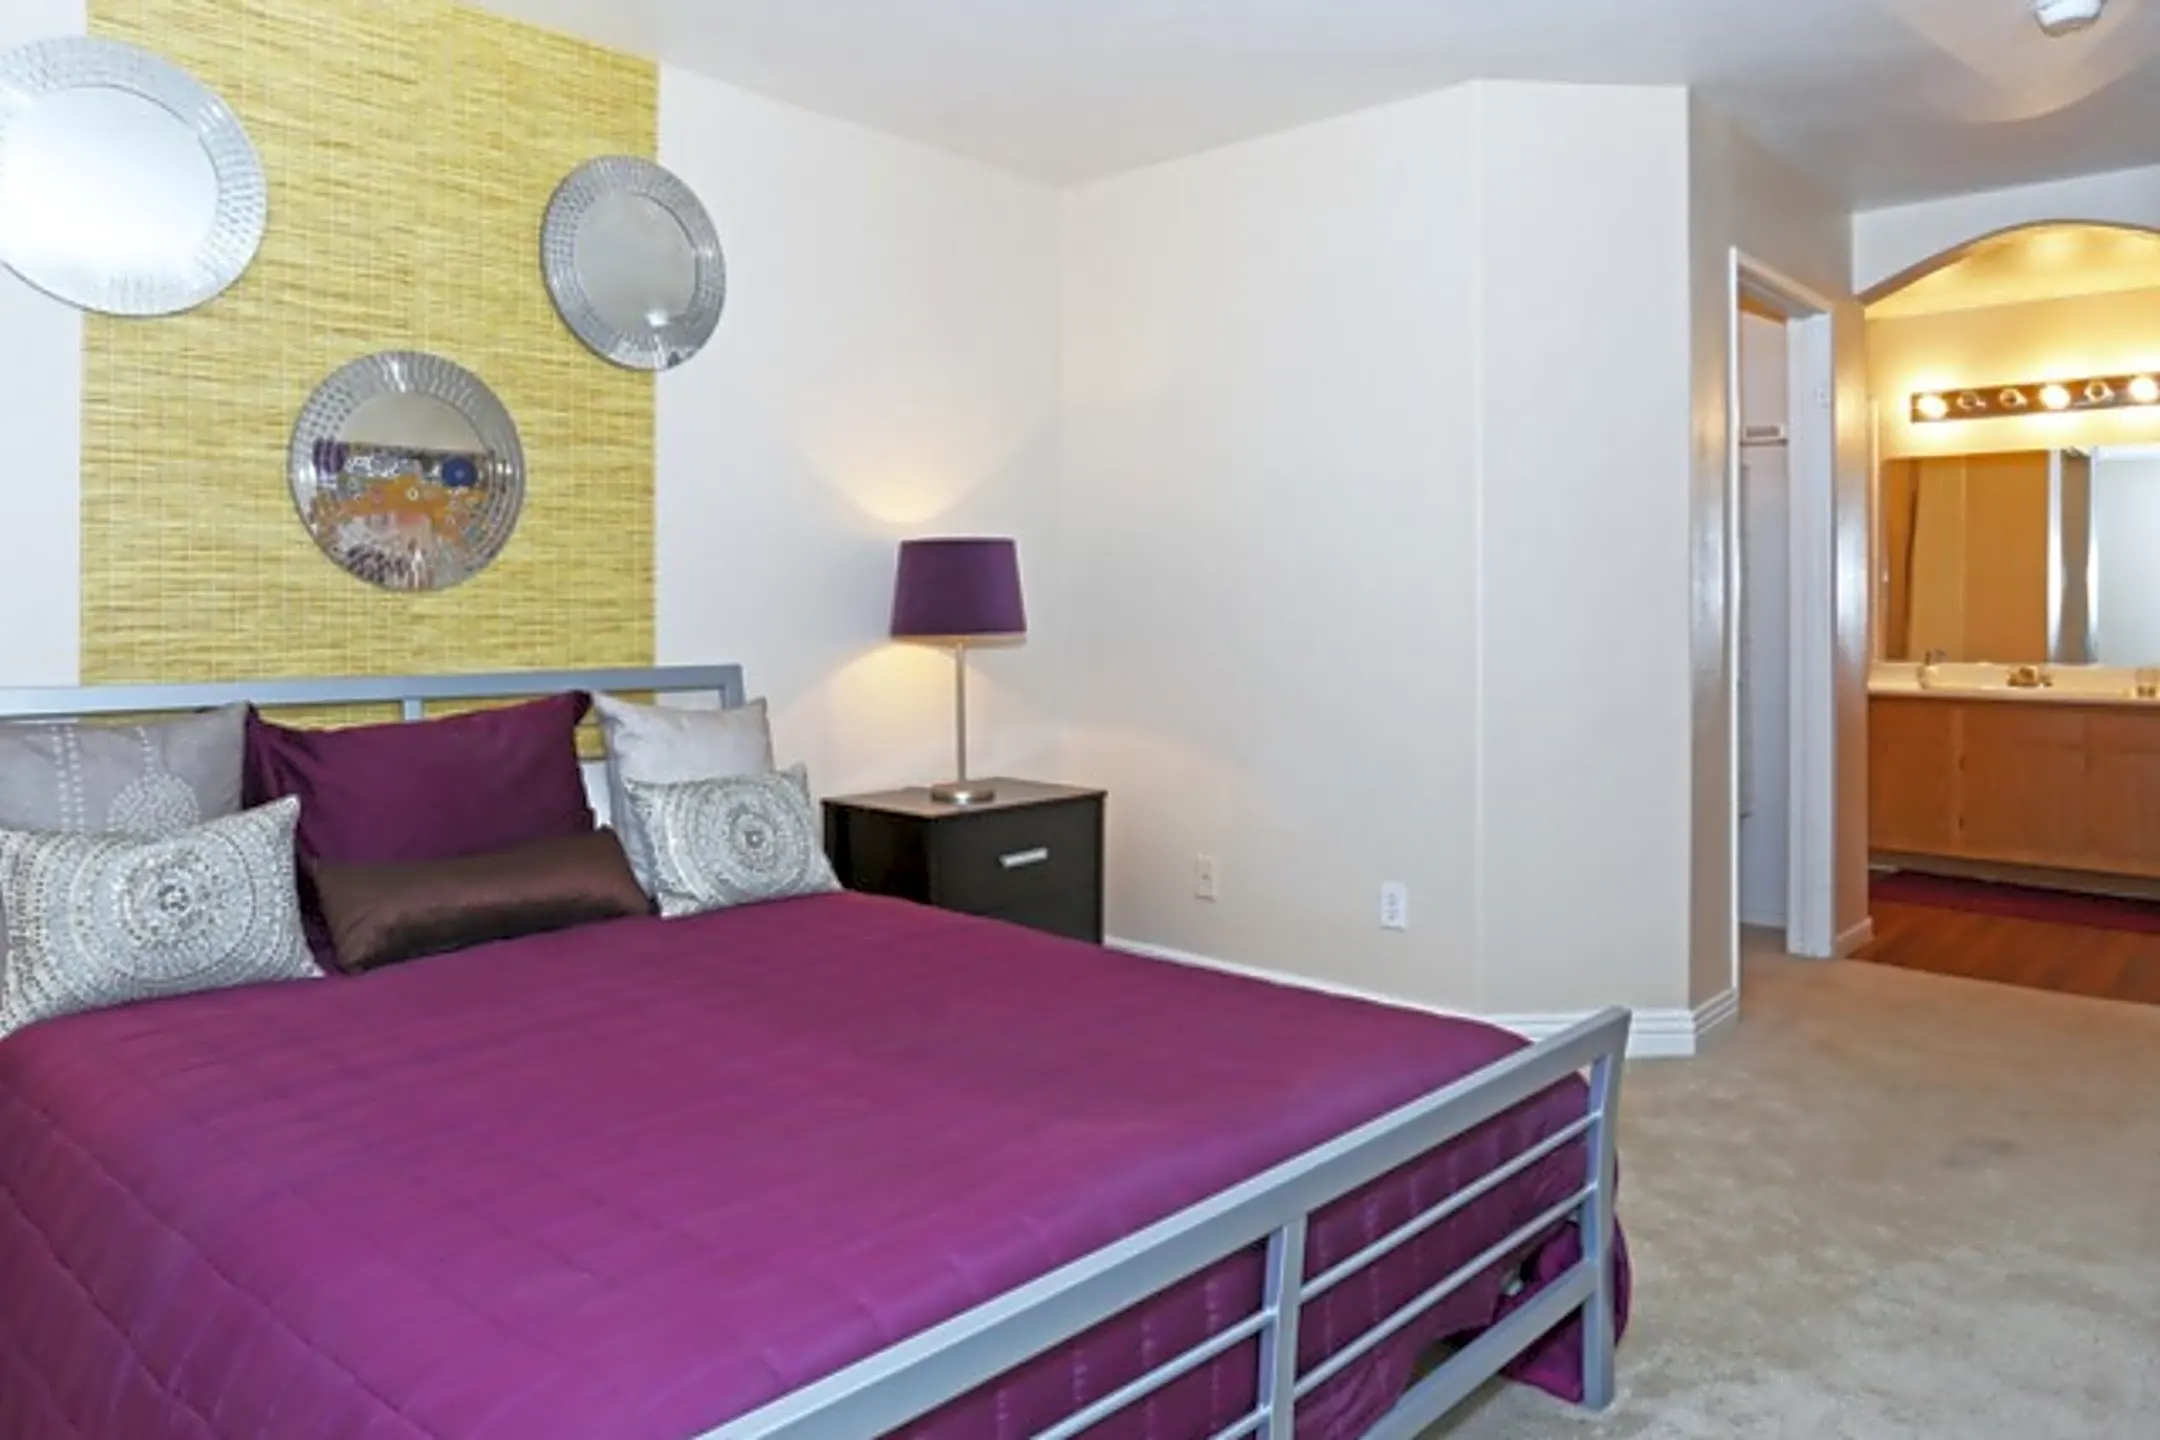 Bedroom - Maravilla Apartments - Las Vegas, NV